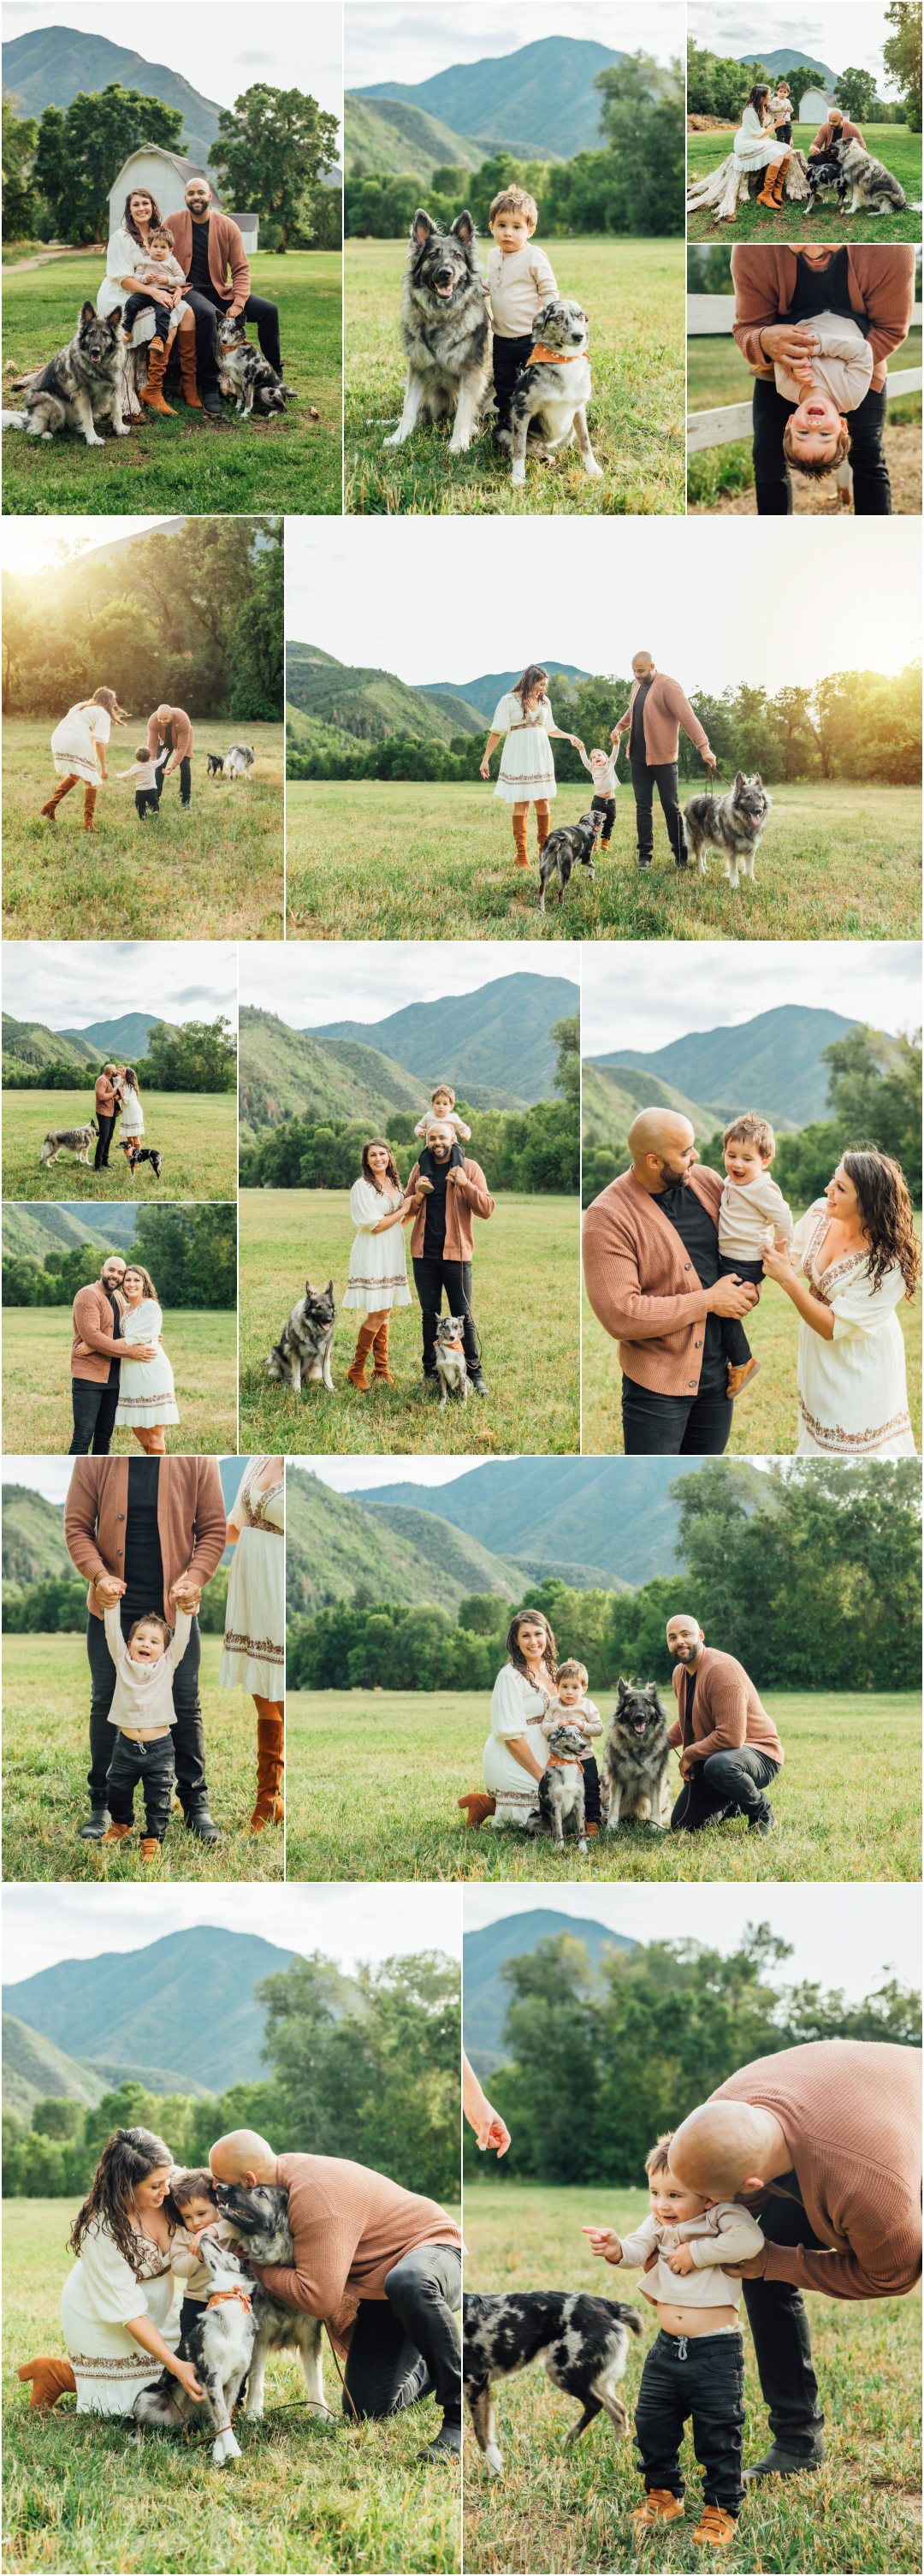 Jolley's Ranch Photographer - Utah Summer Family Photography